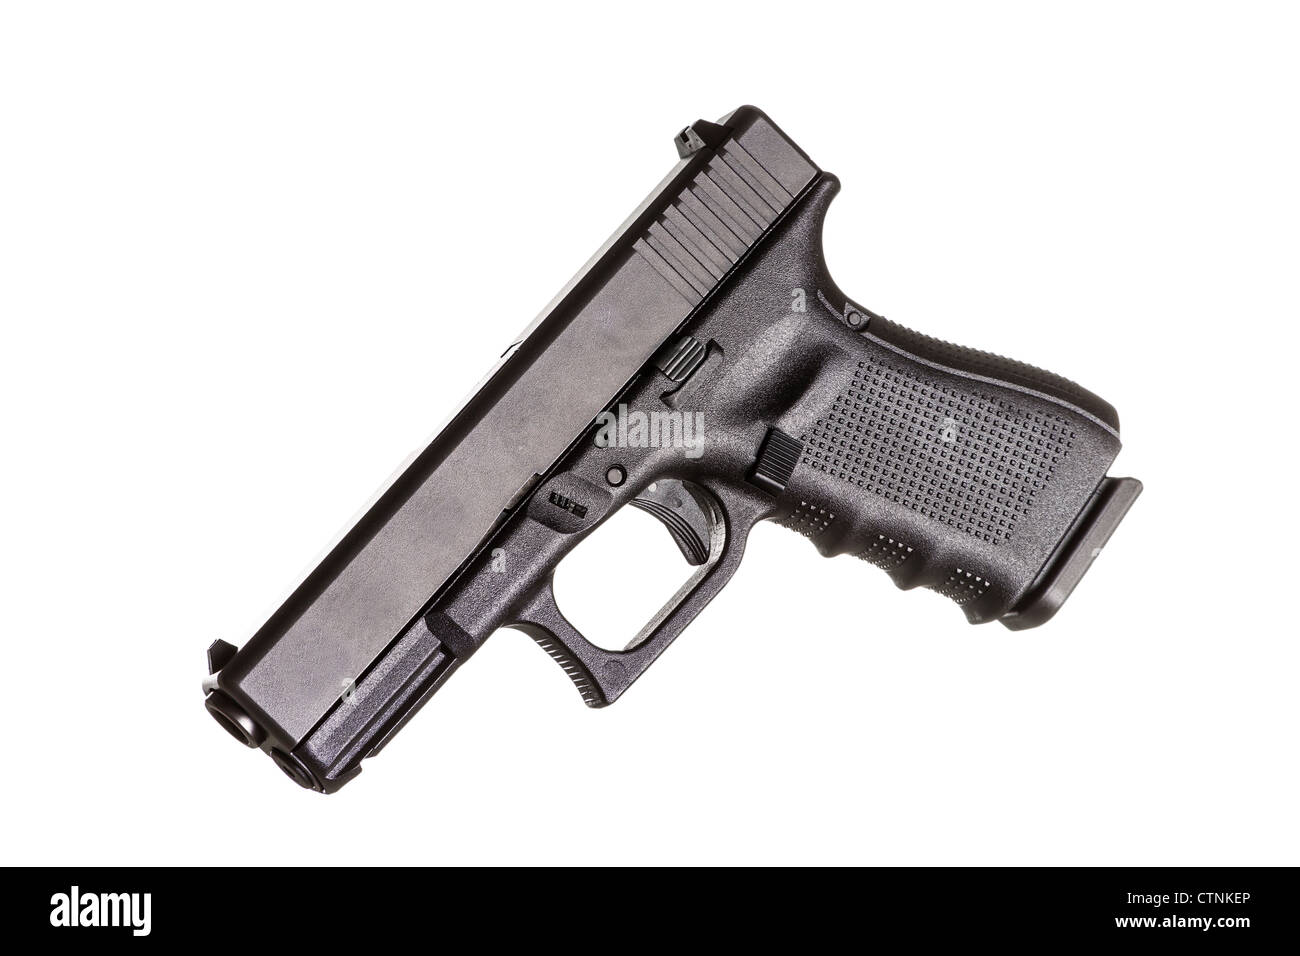 Modern compact pistol on white background Stock Photo